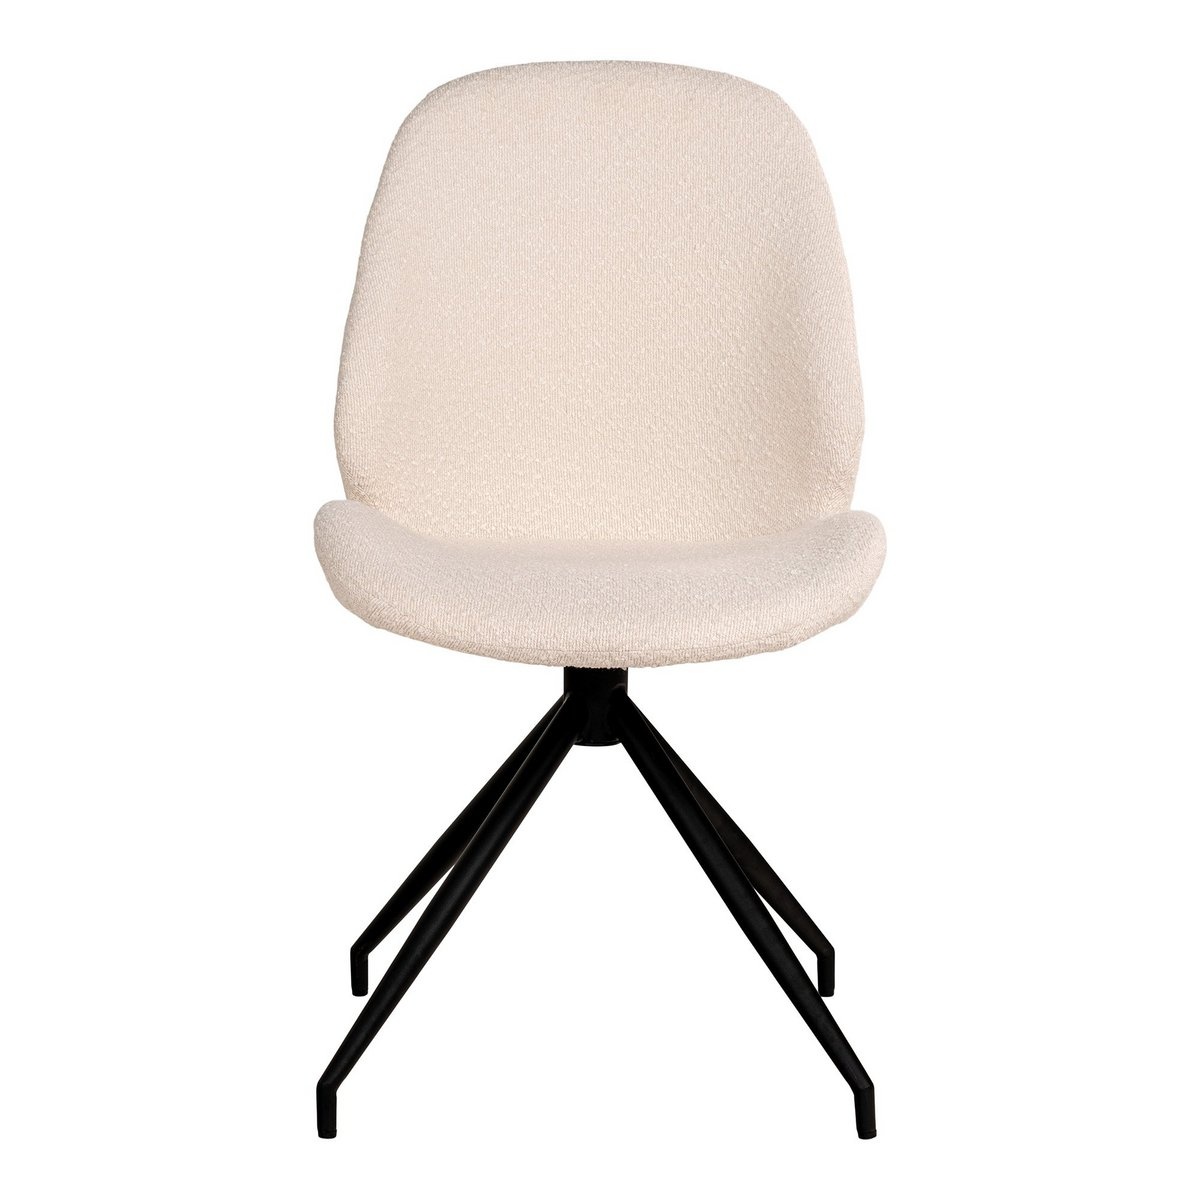 KantoormeubelenPlus Monte Carlo Dining Chair - Eetkamerstoel in bouclé met draaibaar onderstel, wit met zwarte poten, HN1232